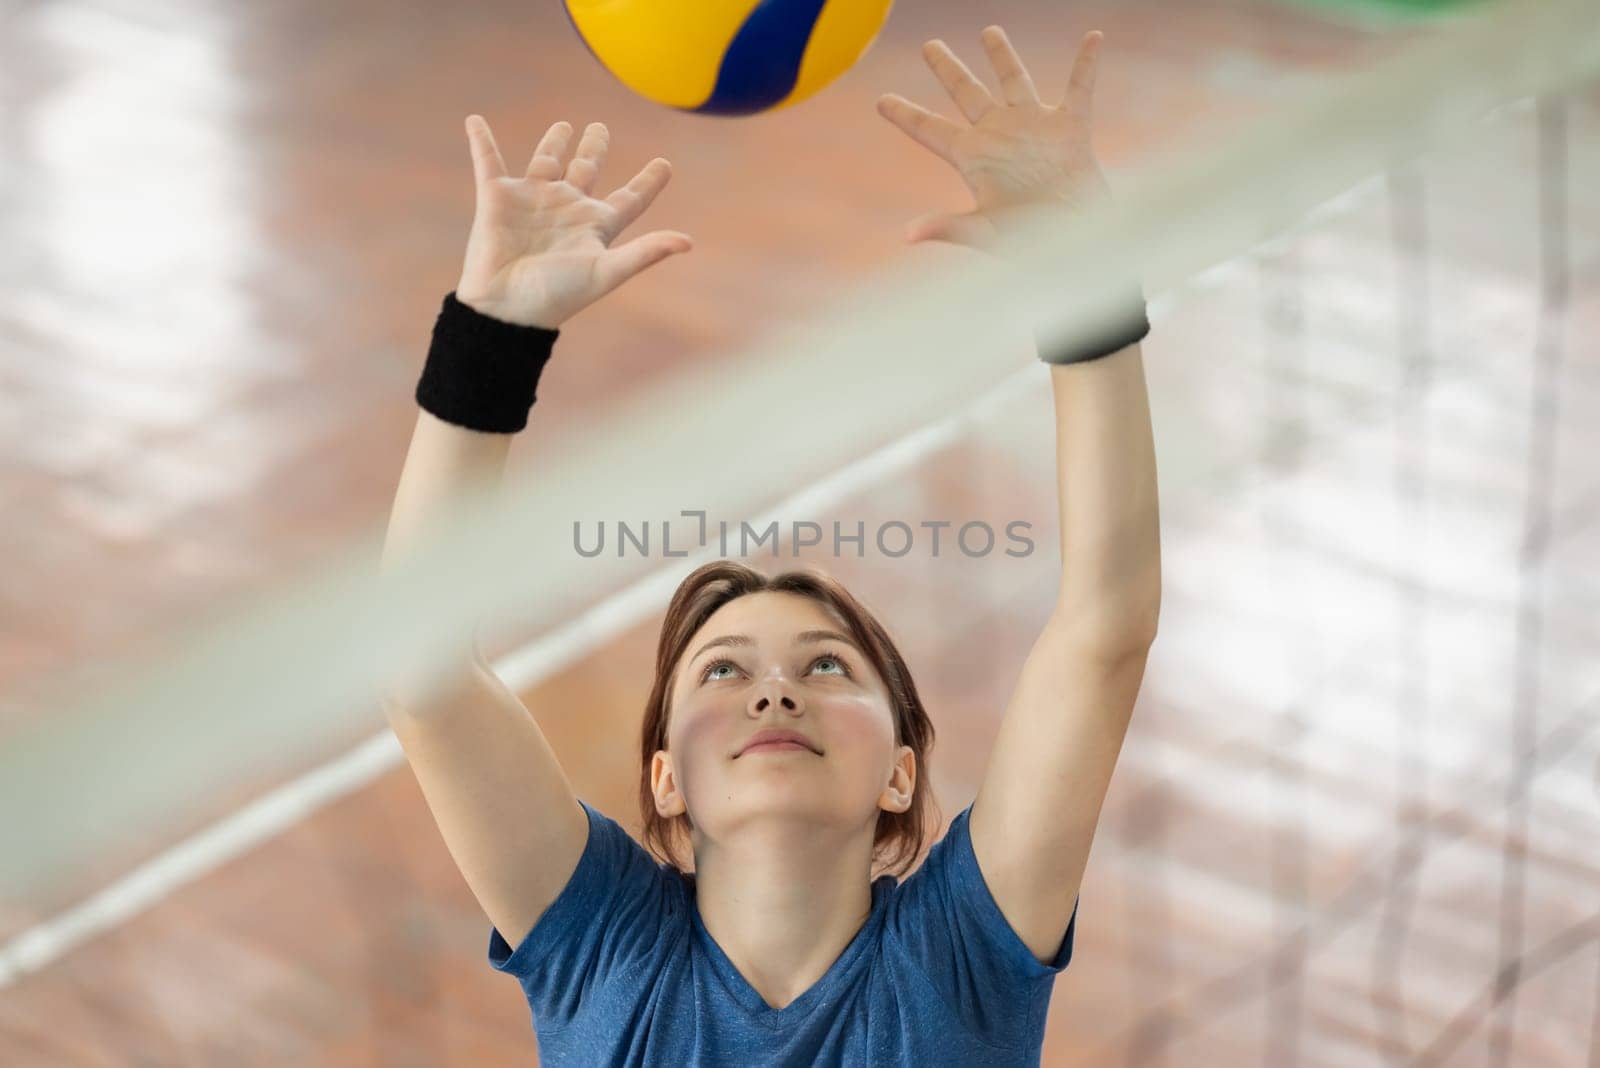 Girl setting the ball near net on volleyball court